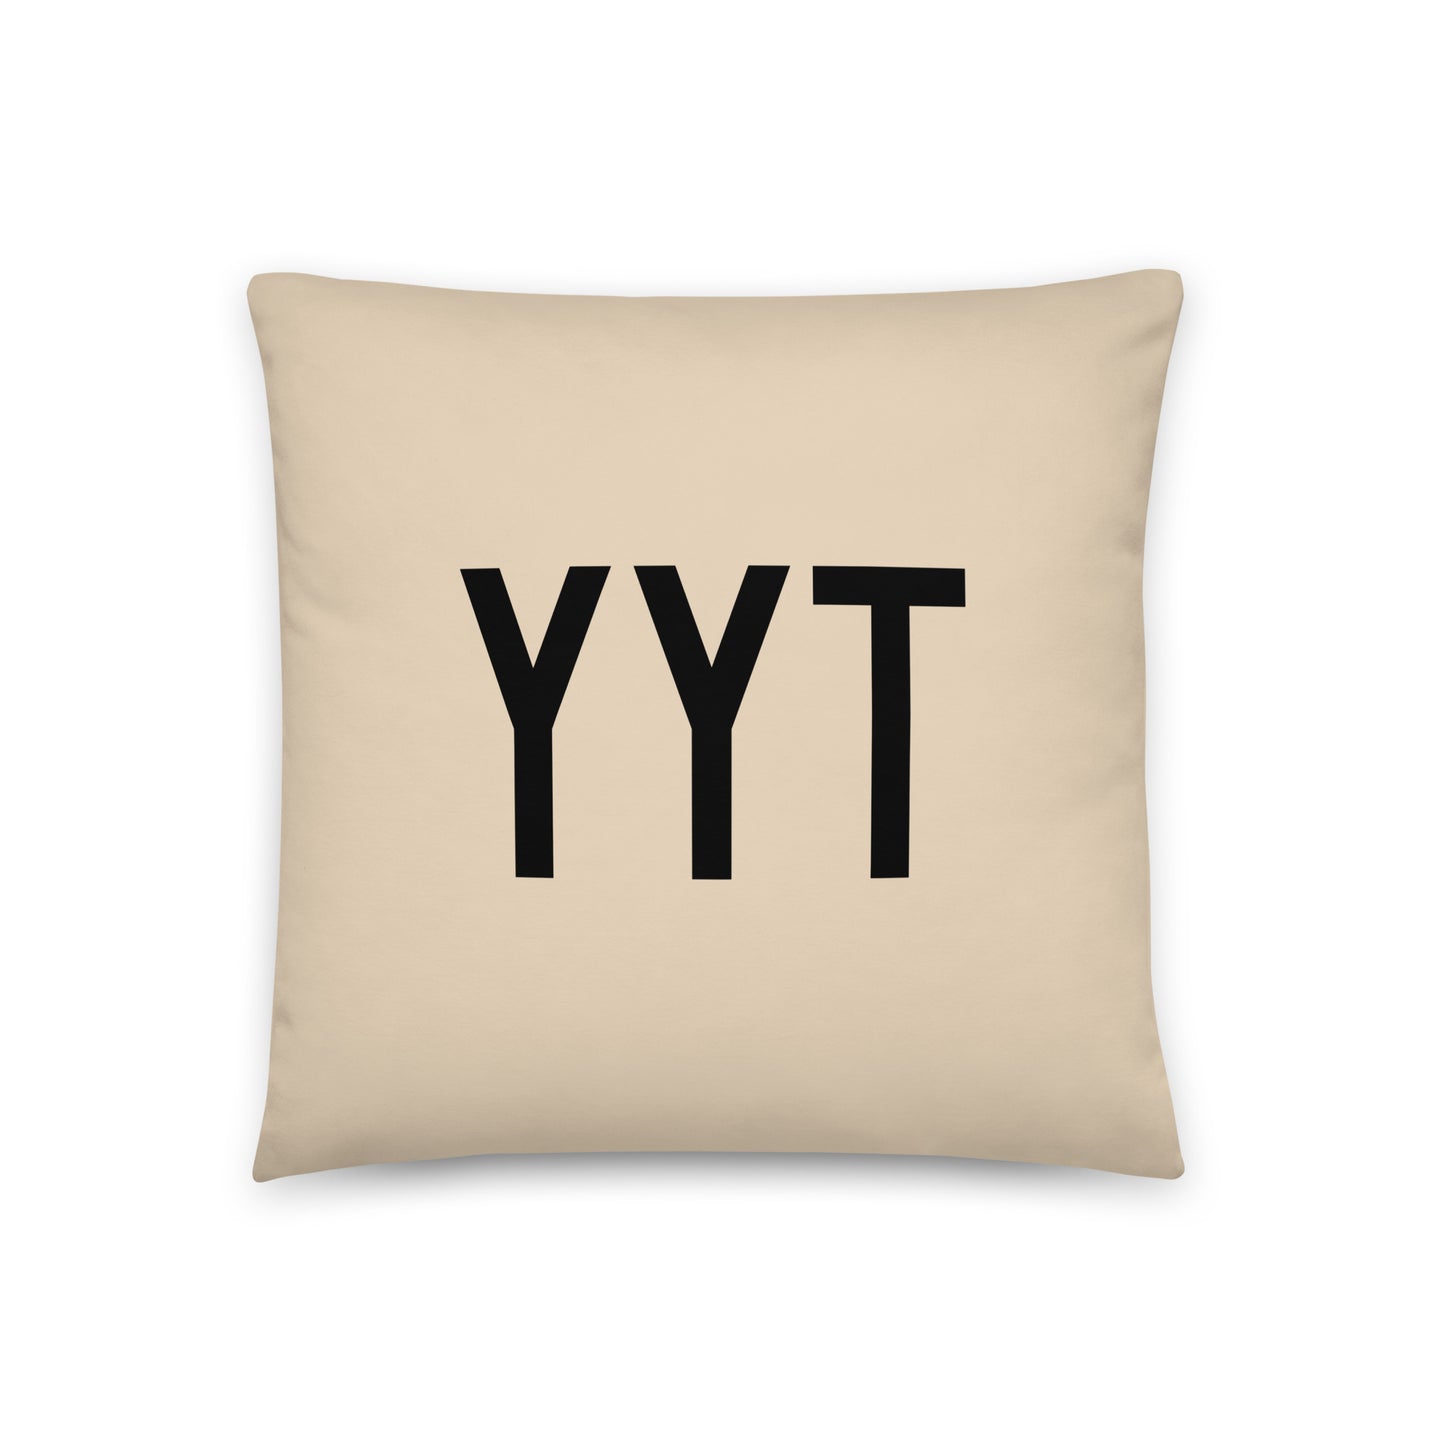 Buffalo Plaid Throw Pillow • YYT St. John's • YHM Designs - Image 03